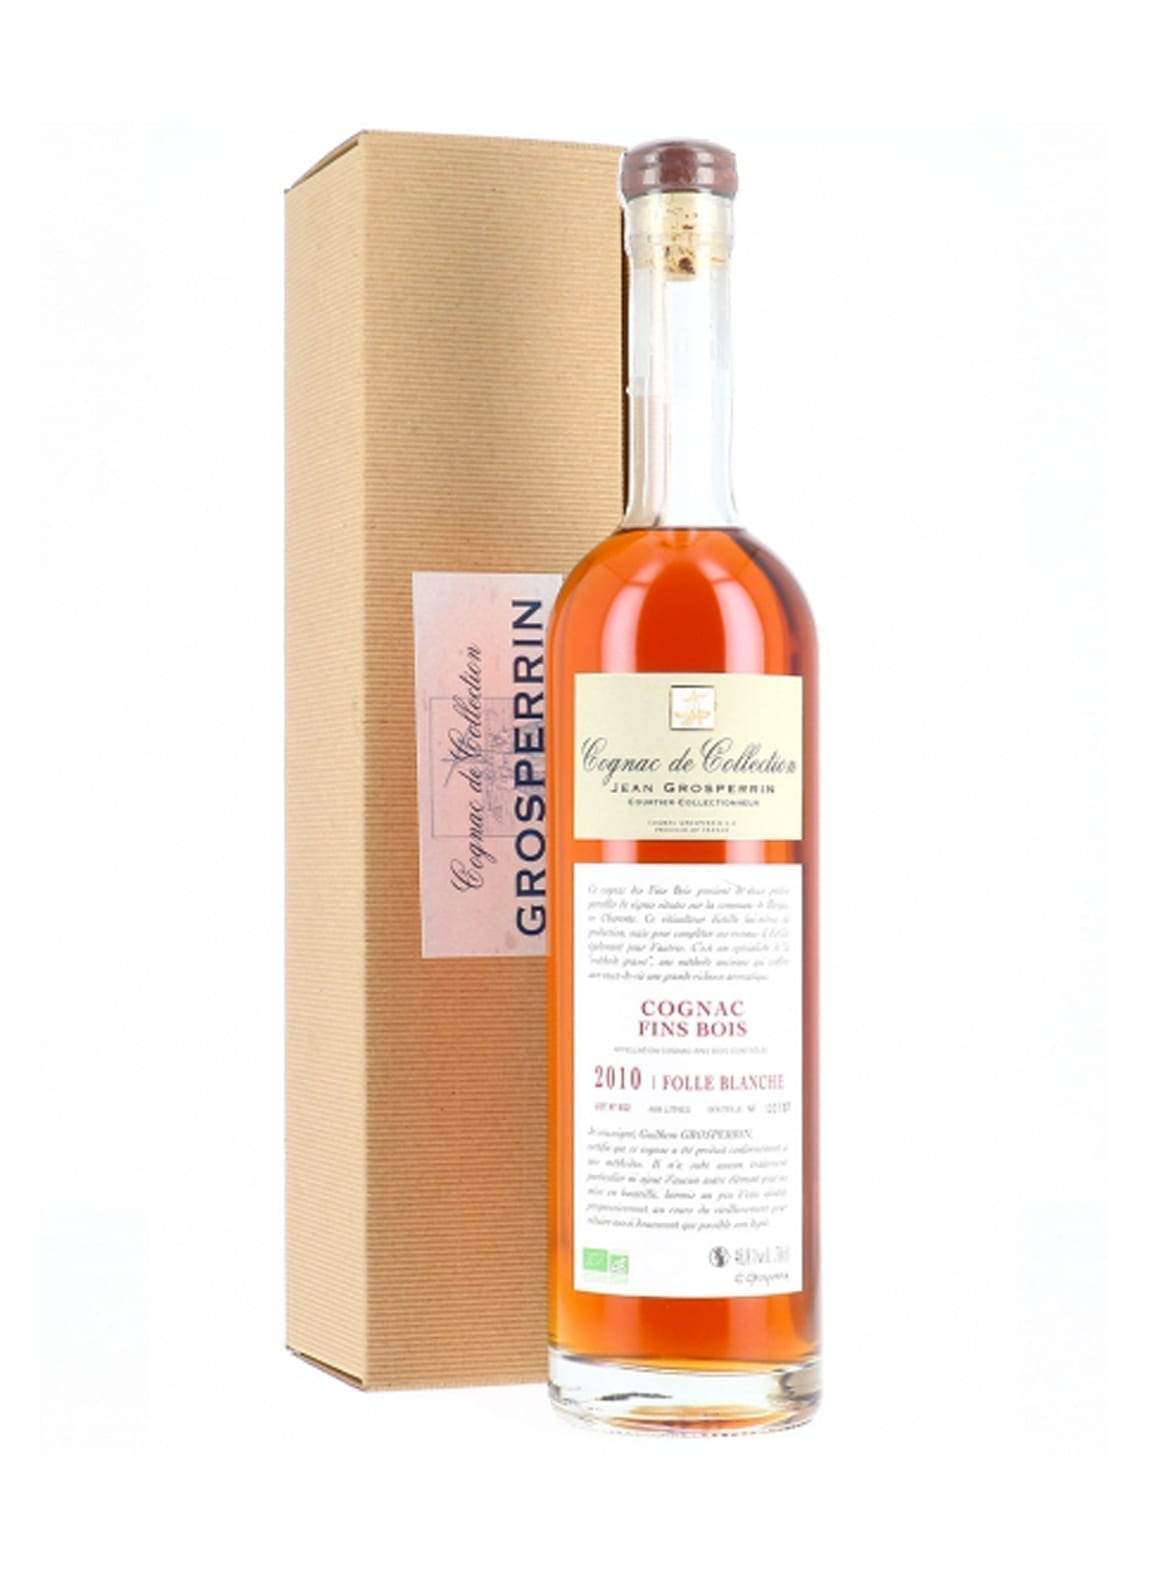 Grosperrin Cognac Fins Bois Organic 2010 46.8% 700ml | Brandy | Shop online at Spirits of France